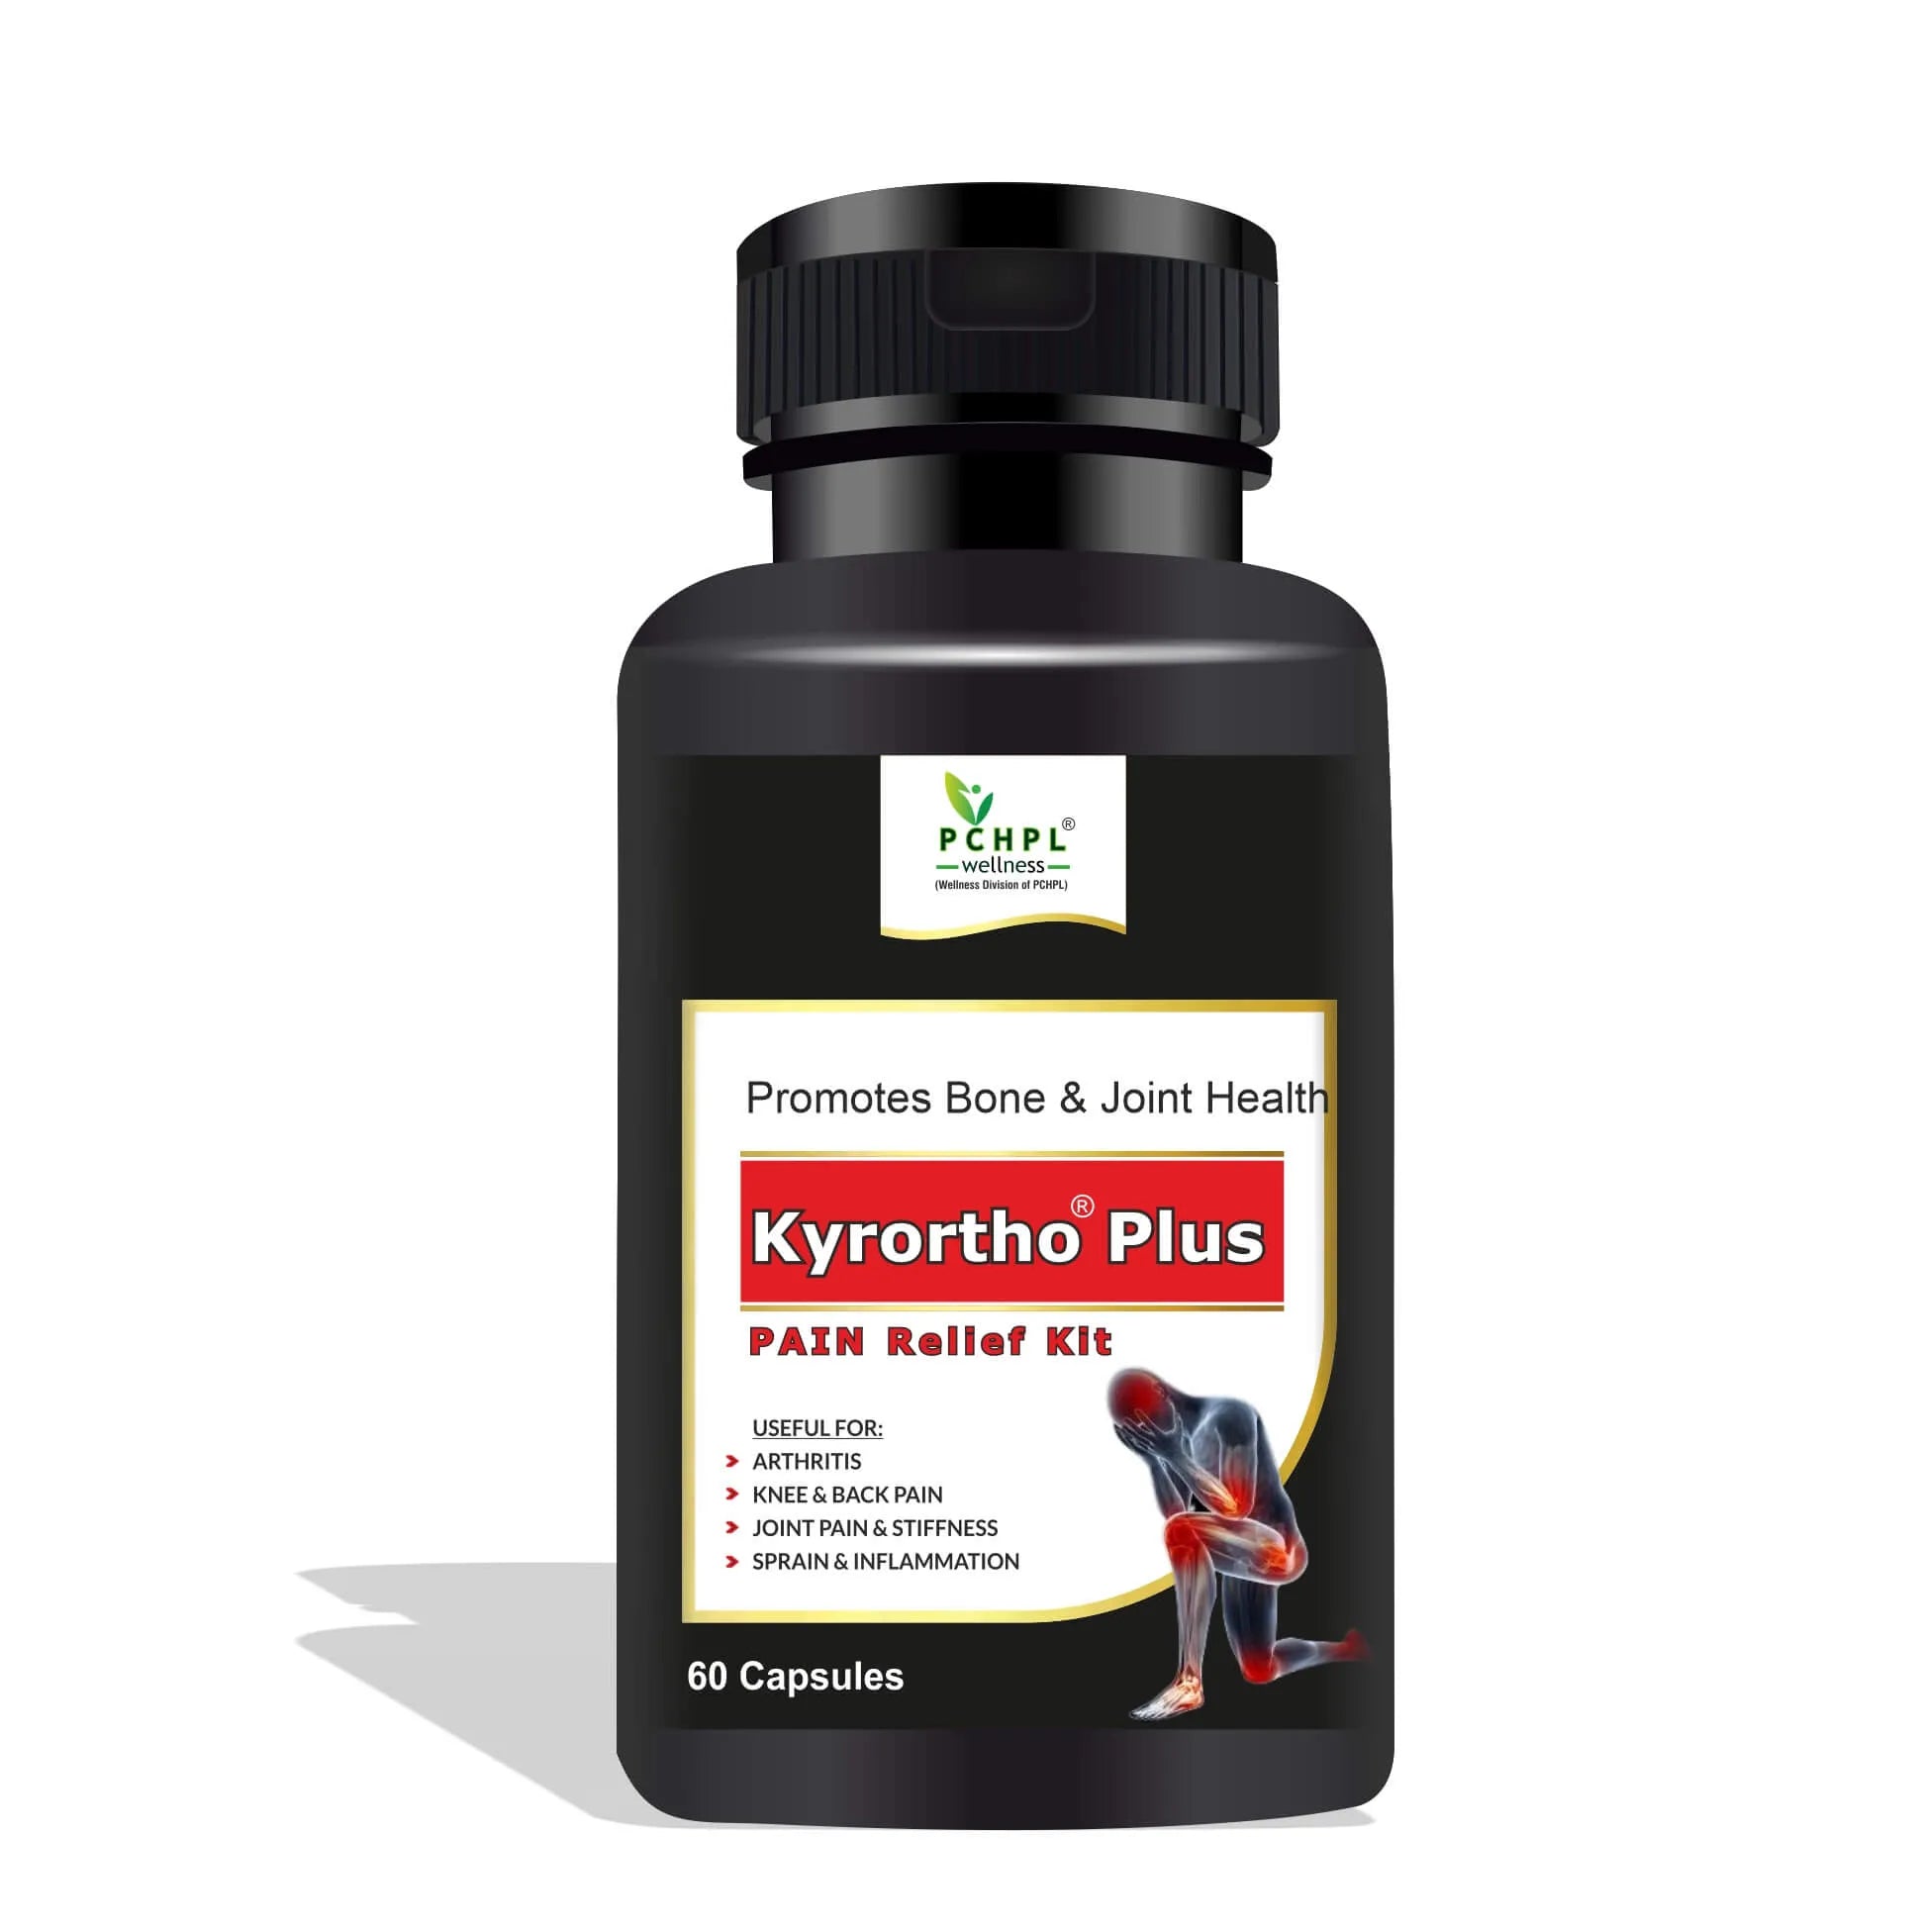 Kyrortho Plus Pain Relief Kit | Sehatokart